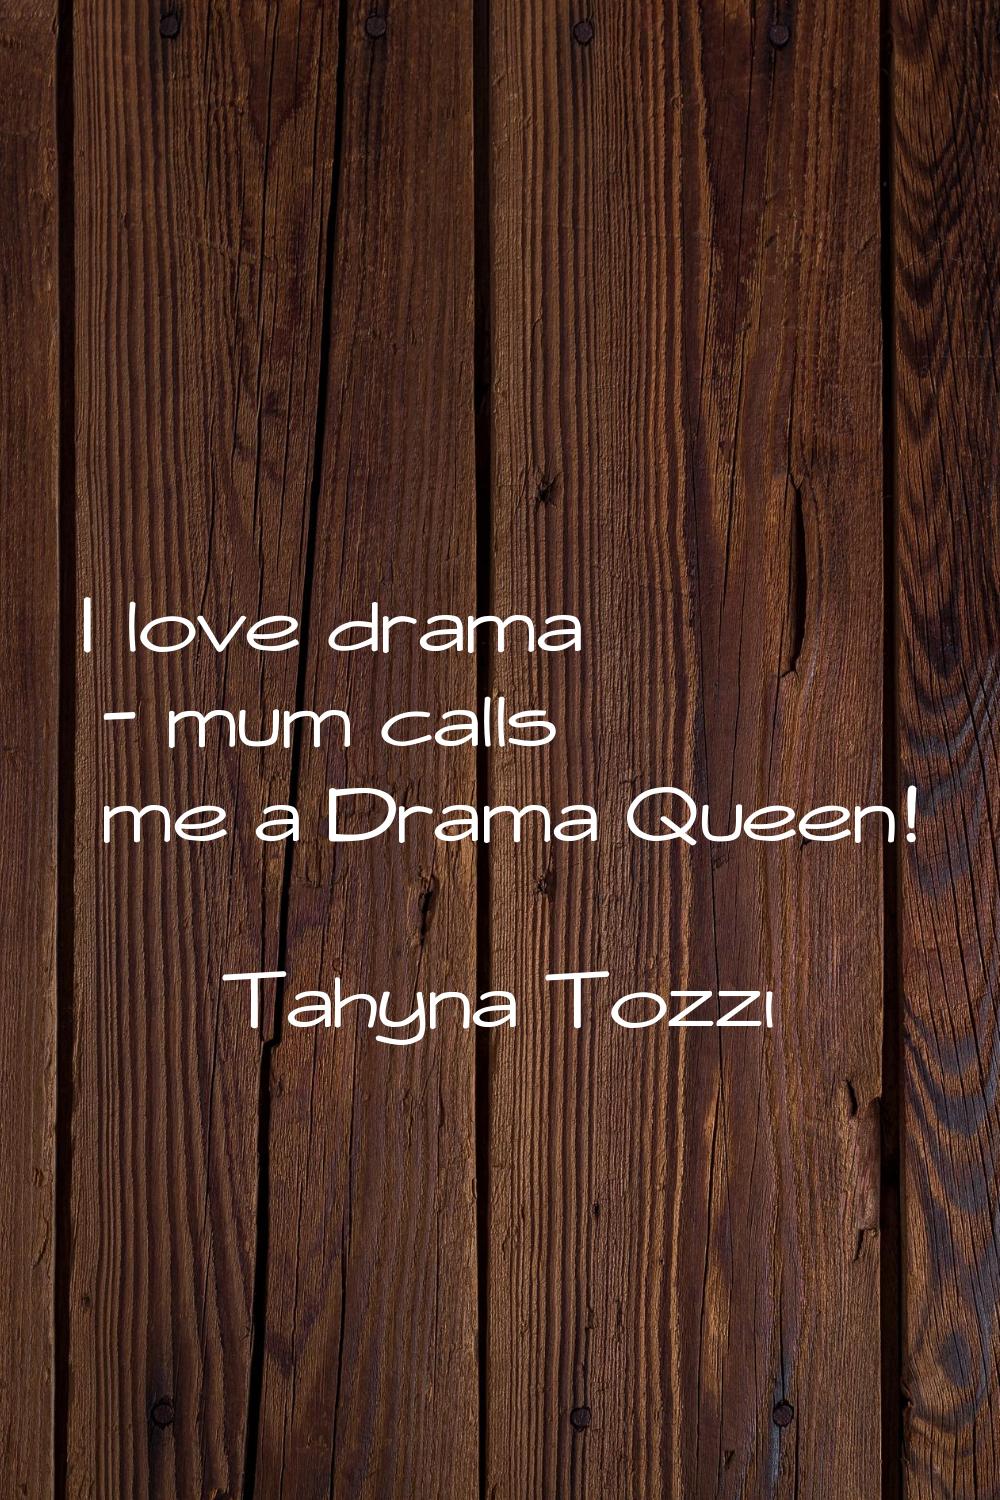 I love drama - mum calls me a Drama Queen!